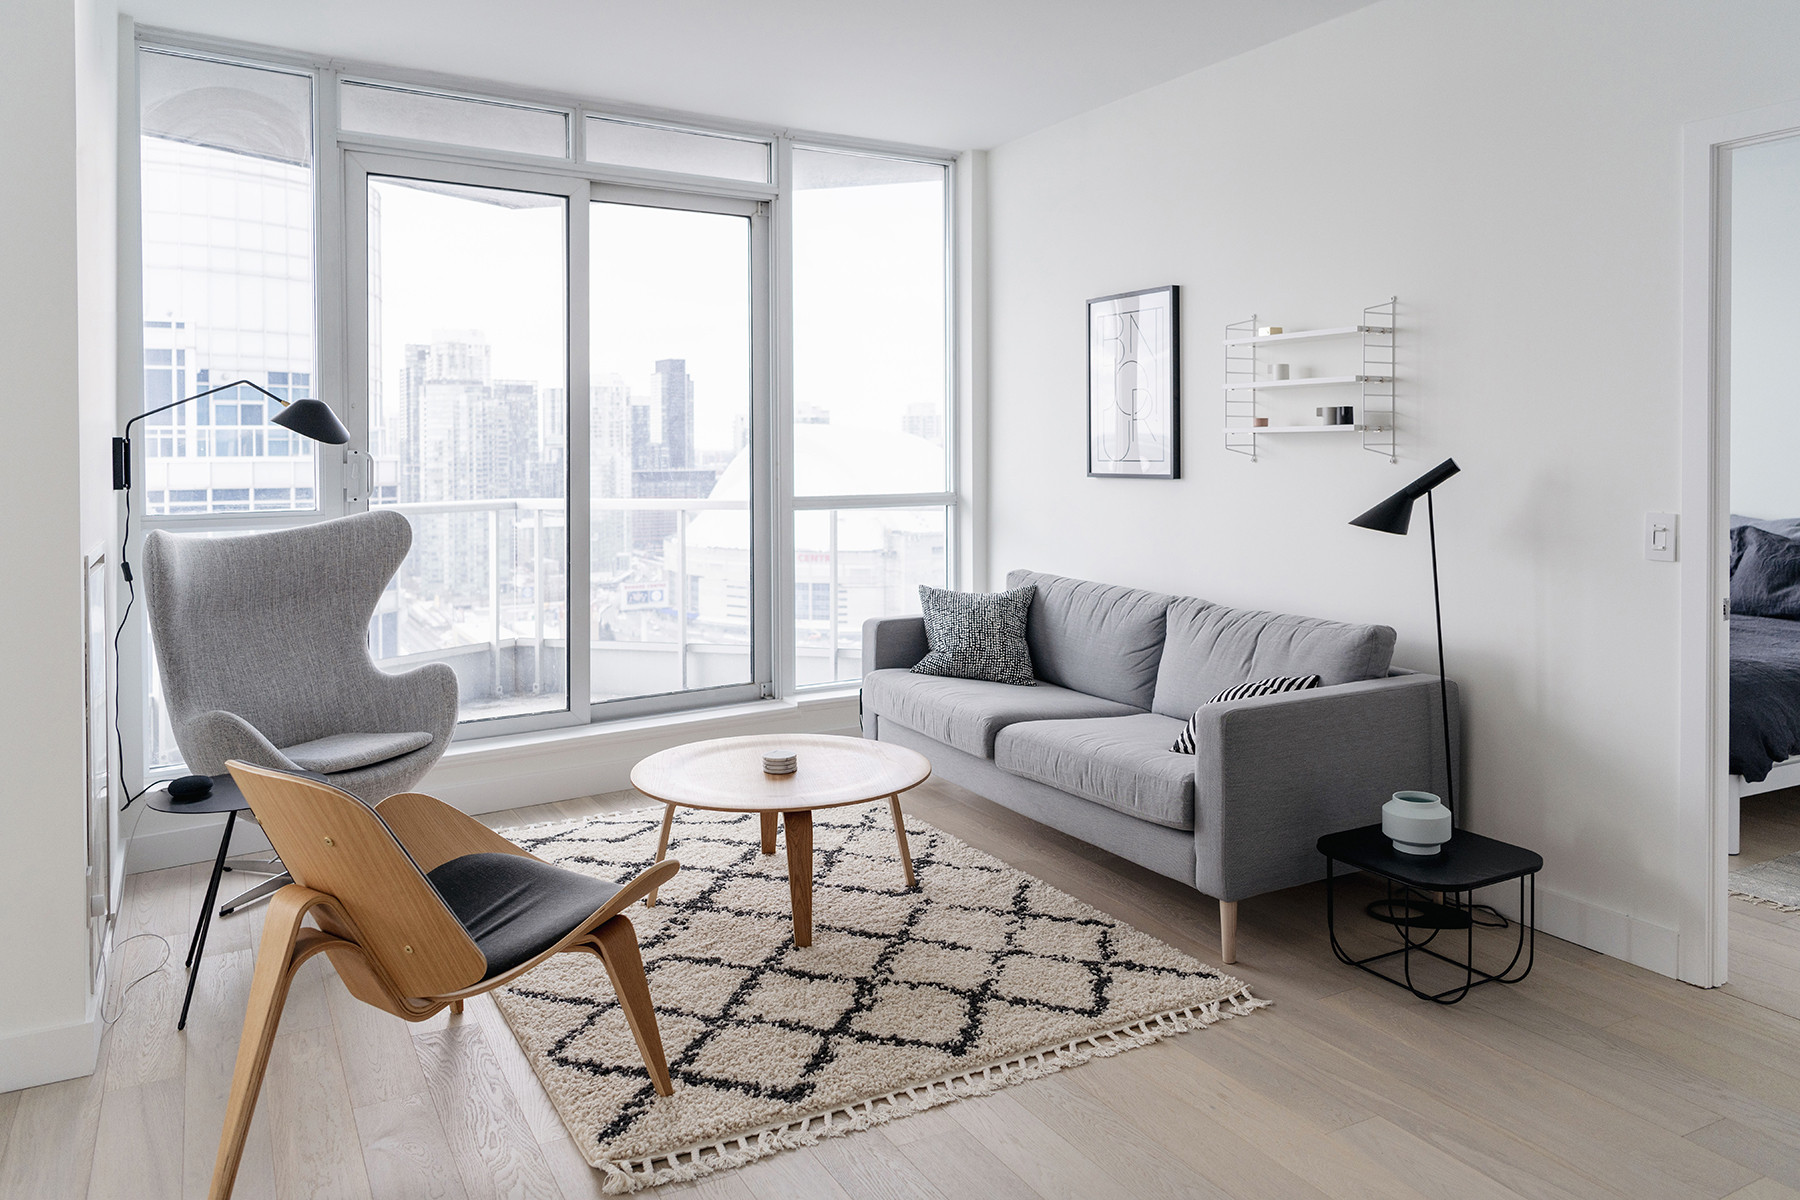 Minimalist Living Room Design
 Condo living room tour a bright minimalist space